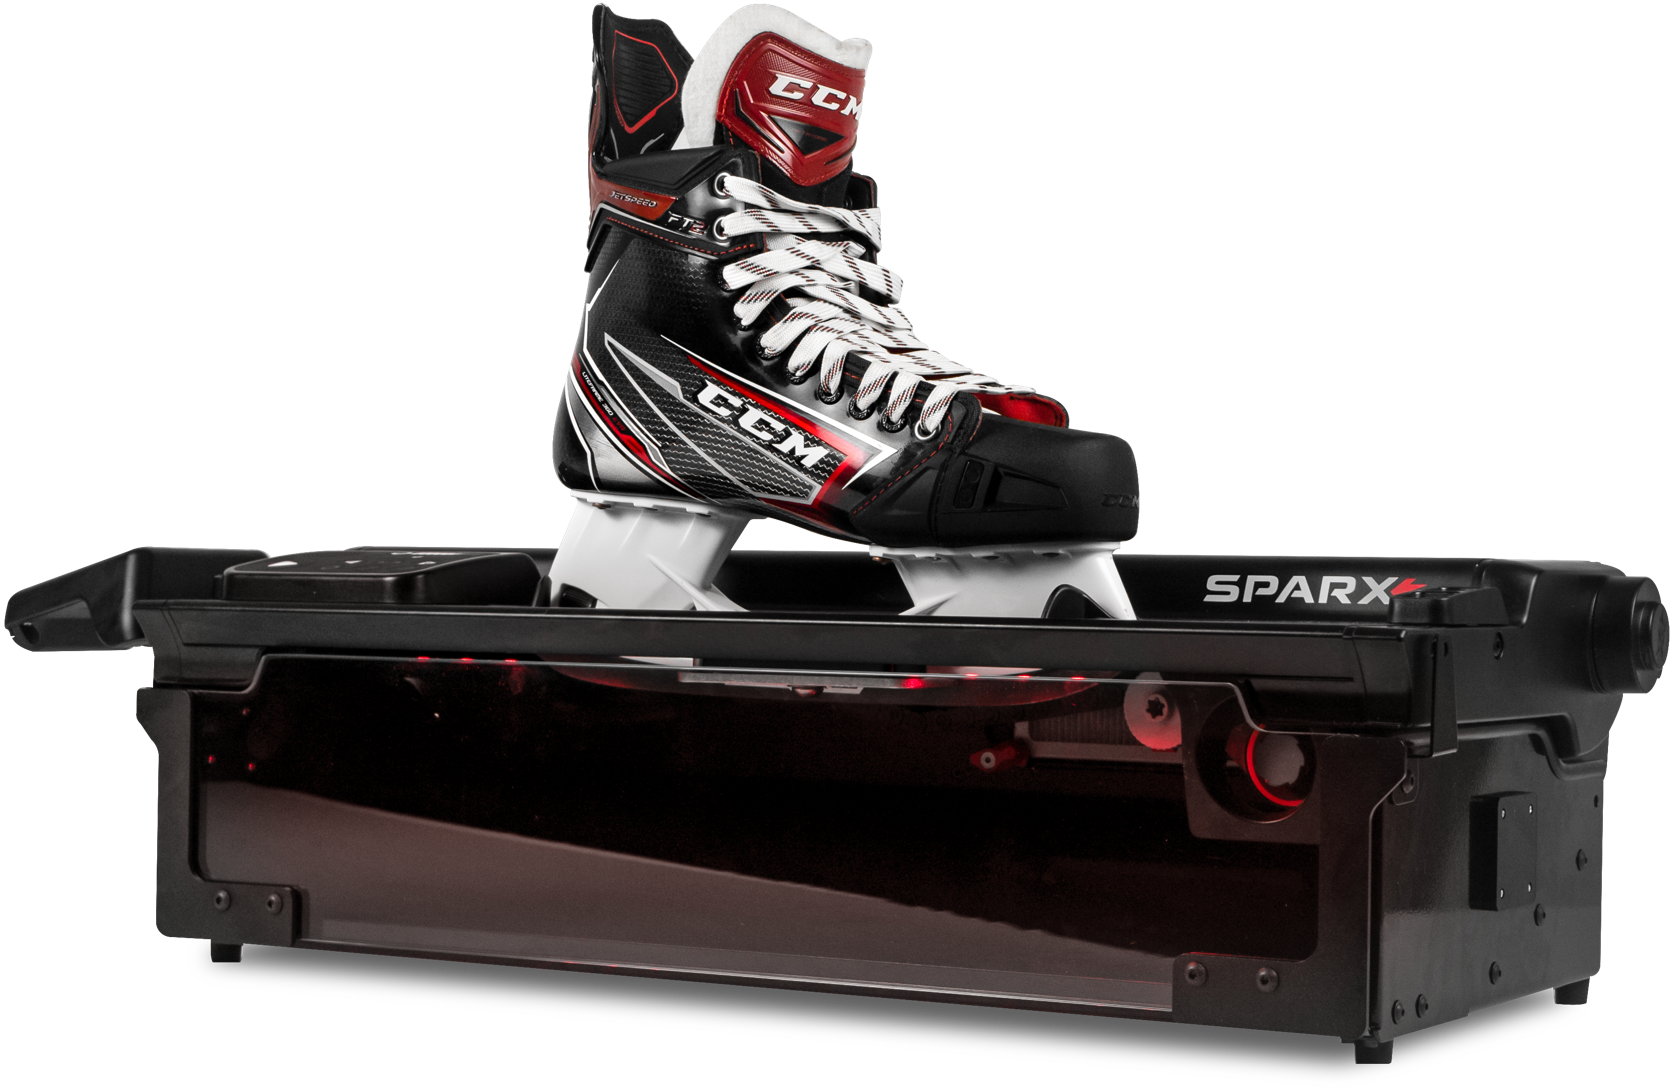 Sparx Ice Hockey Skate Sharpener Review - Best Skate Reviews